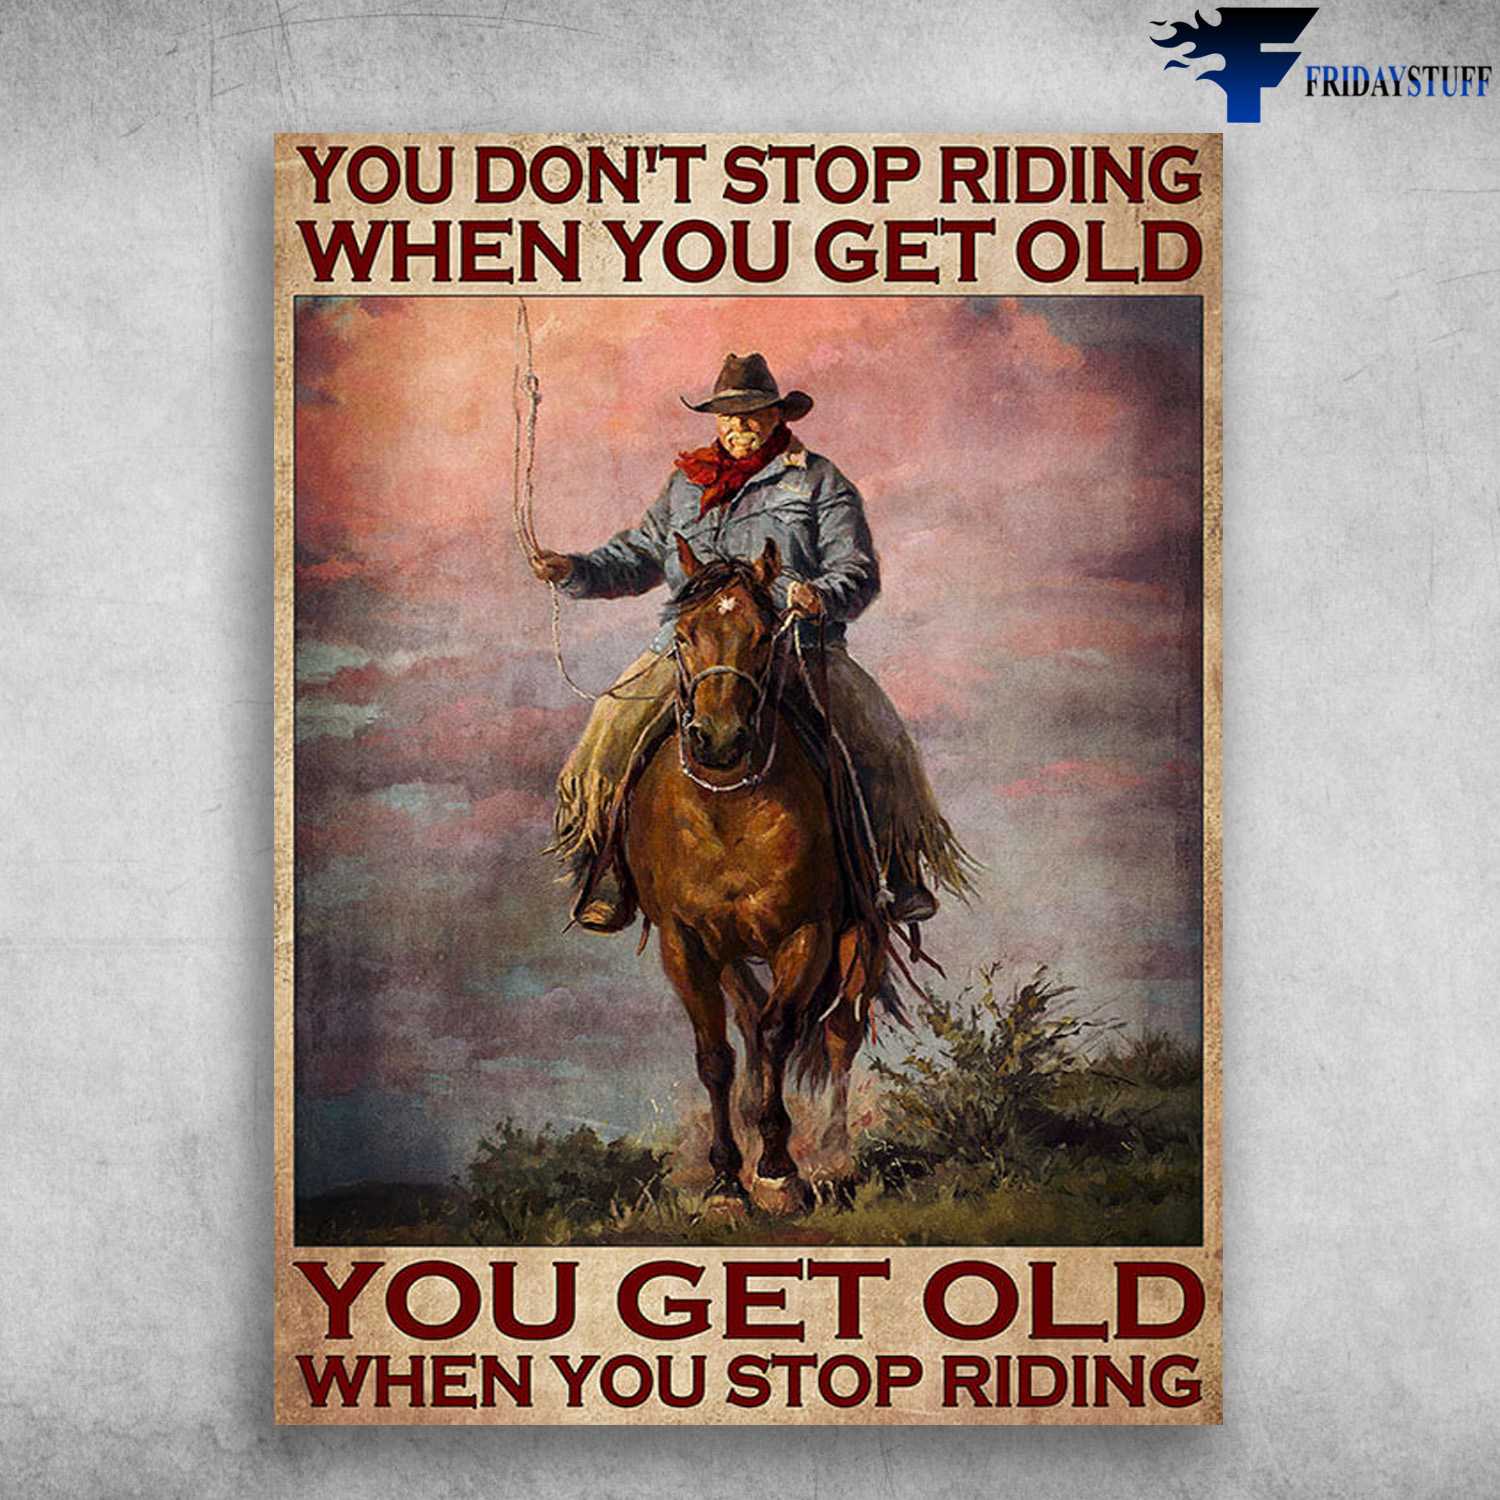 Old Cowboy Riding, Horse Riding Poster, You Don't Stop Riding When You Get Old, You Get Old When You Stop Riding